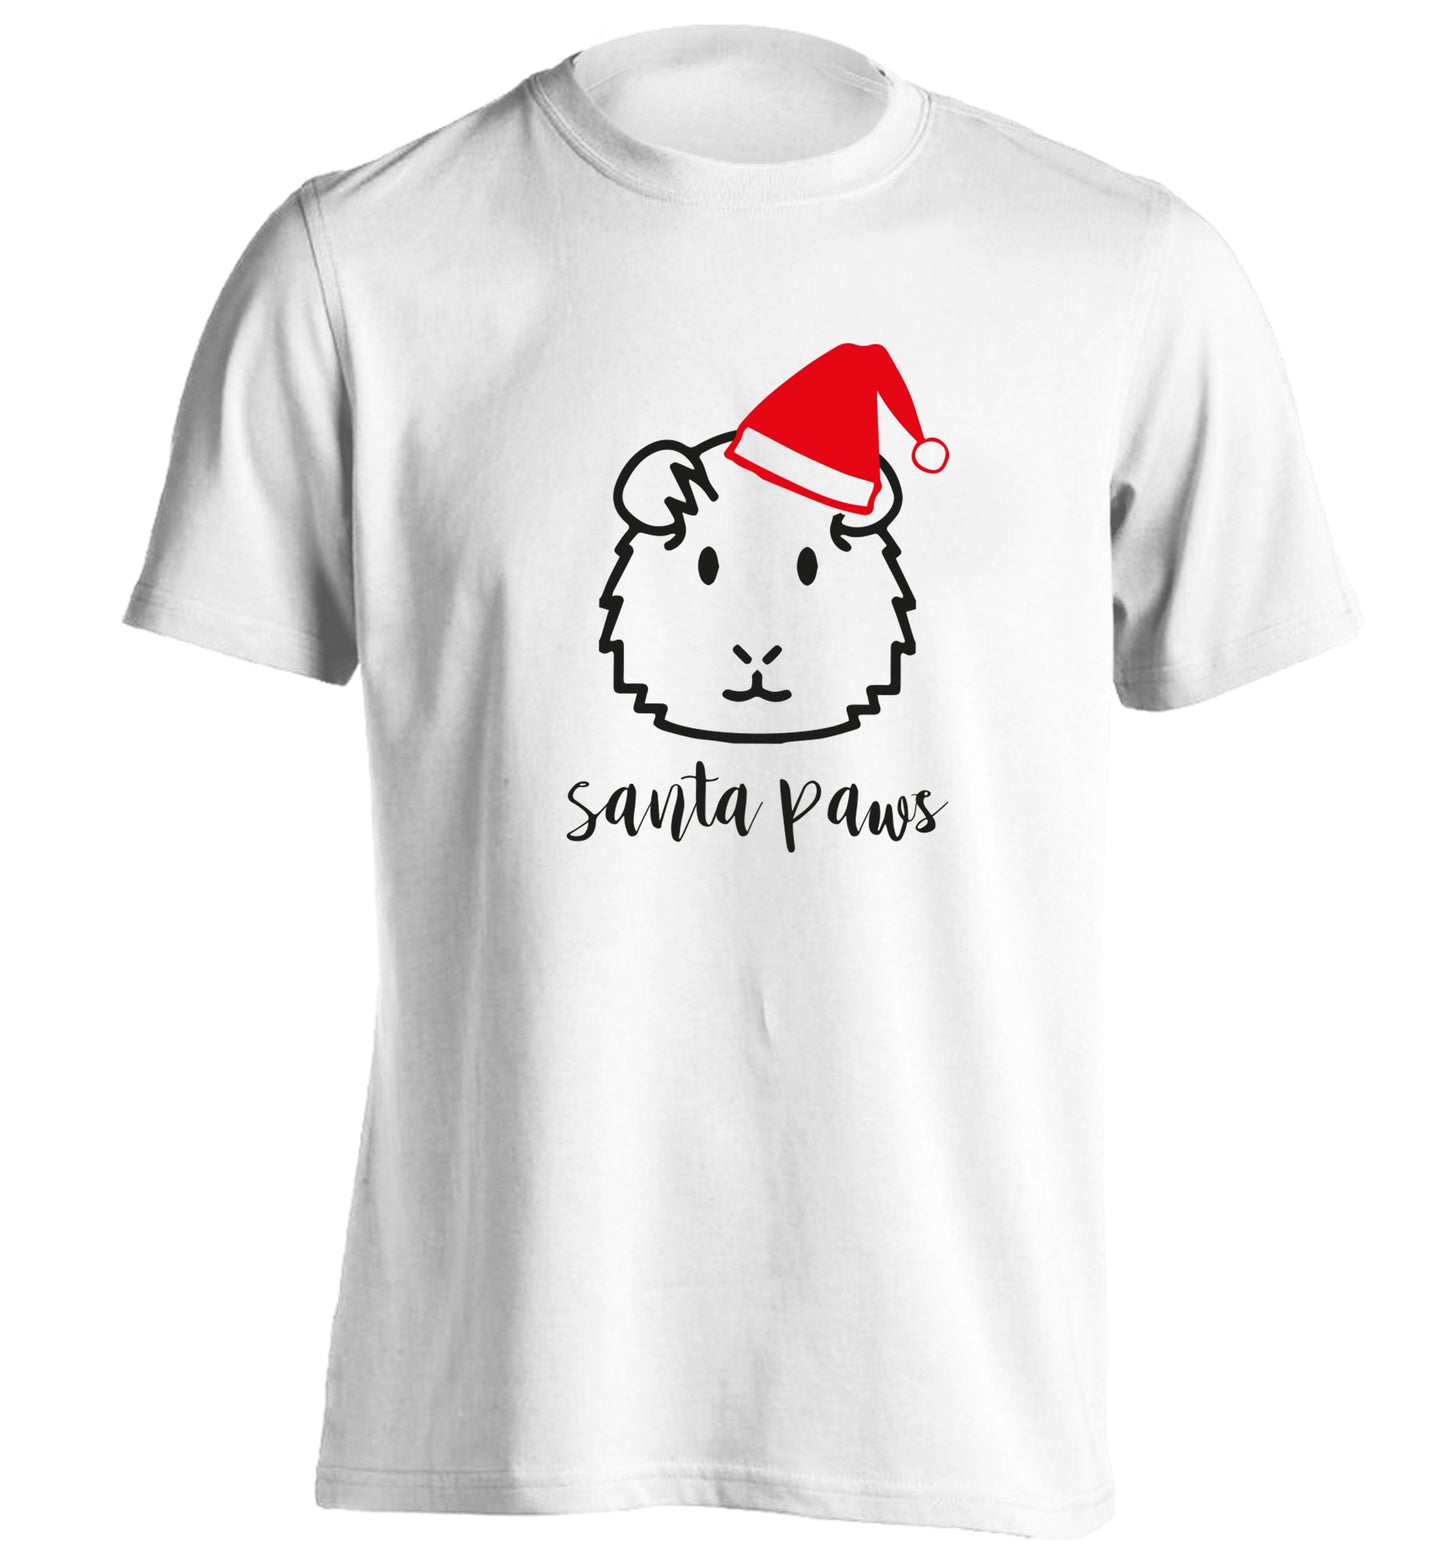 Guinea pig Santa Paws adults unisex white Tshirt 2XL